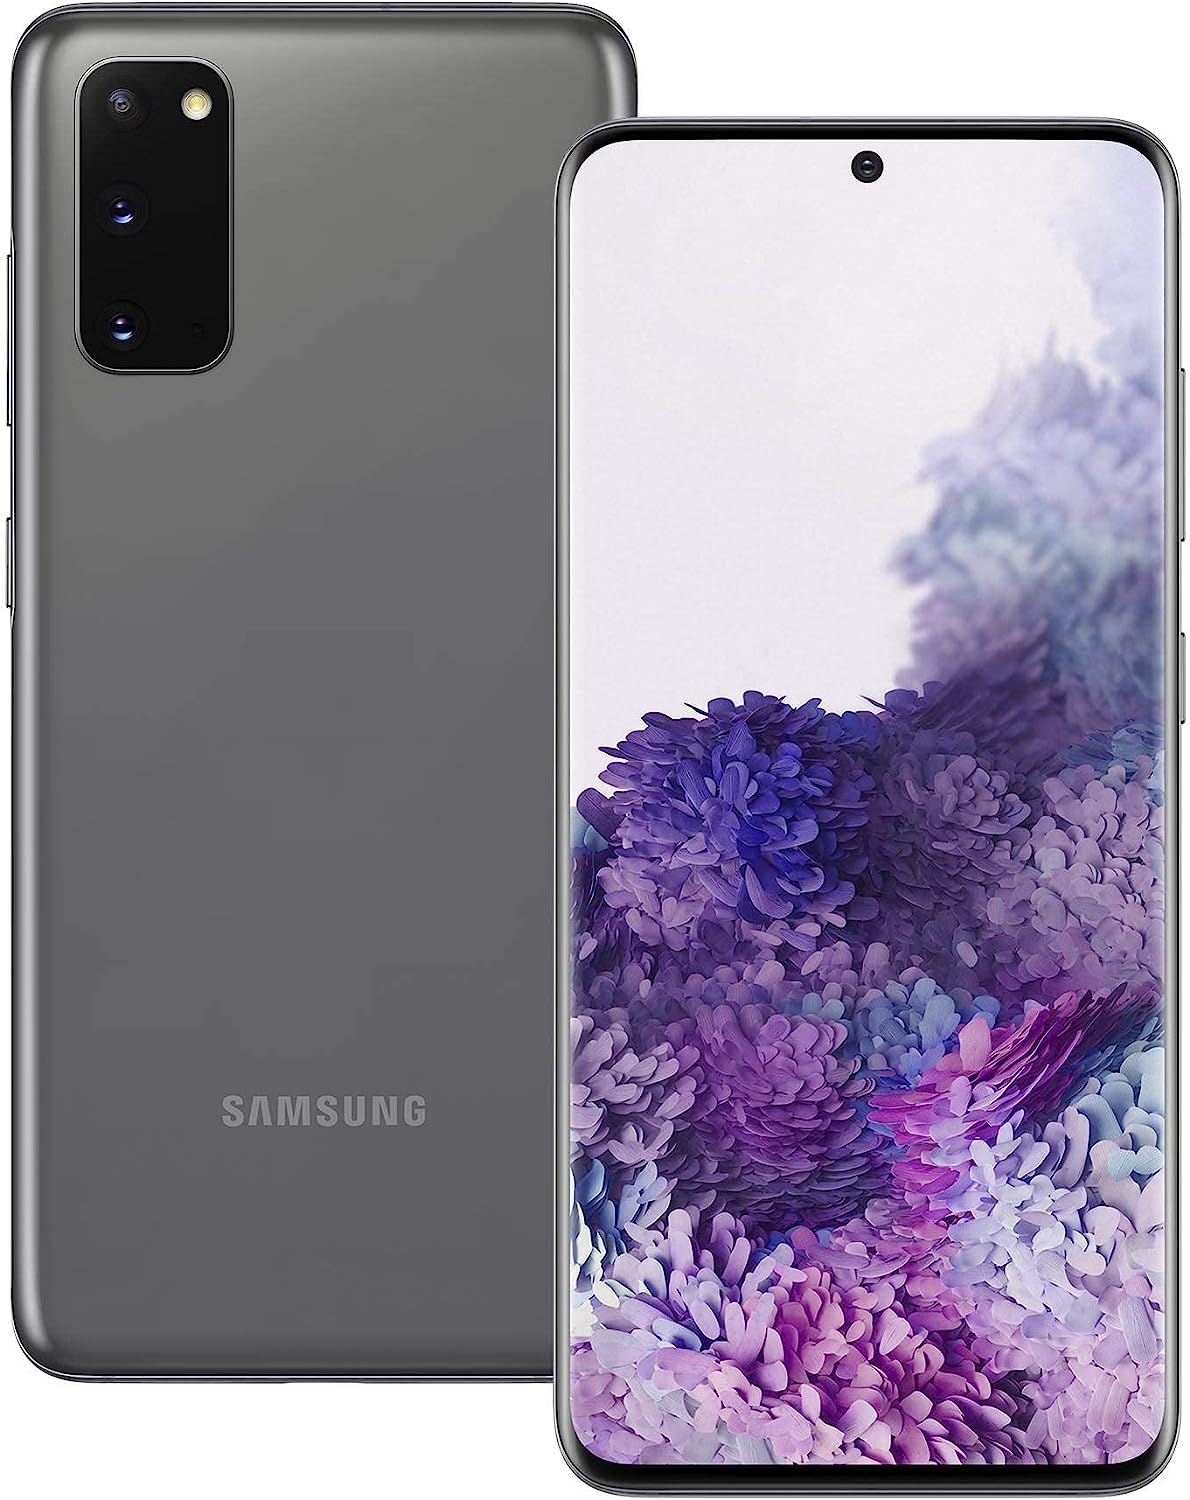 Samsung Galaxy S20 Plus 5G 128GB Grey Very Good 128GB Grey Very Good